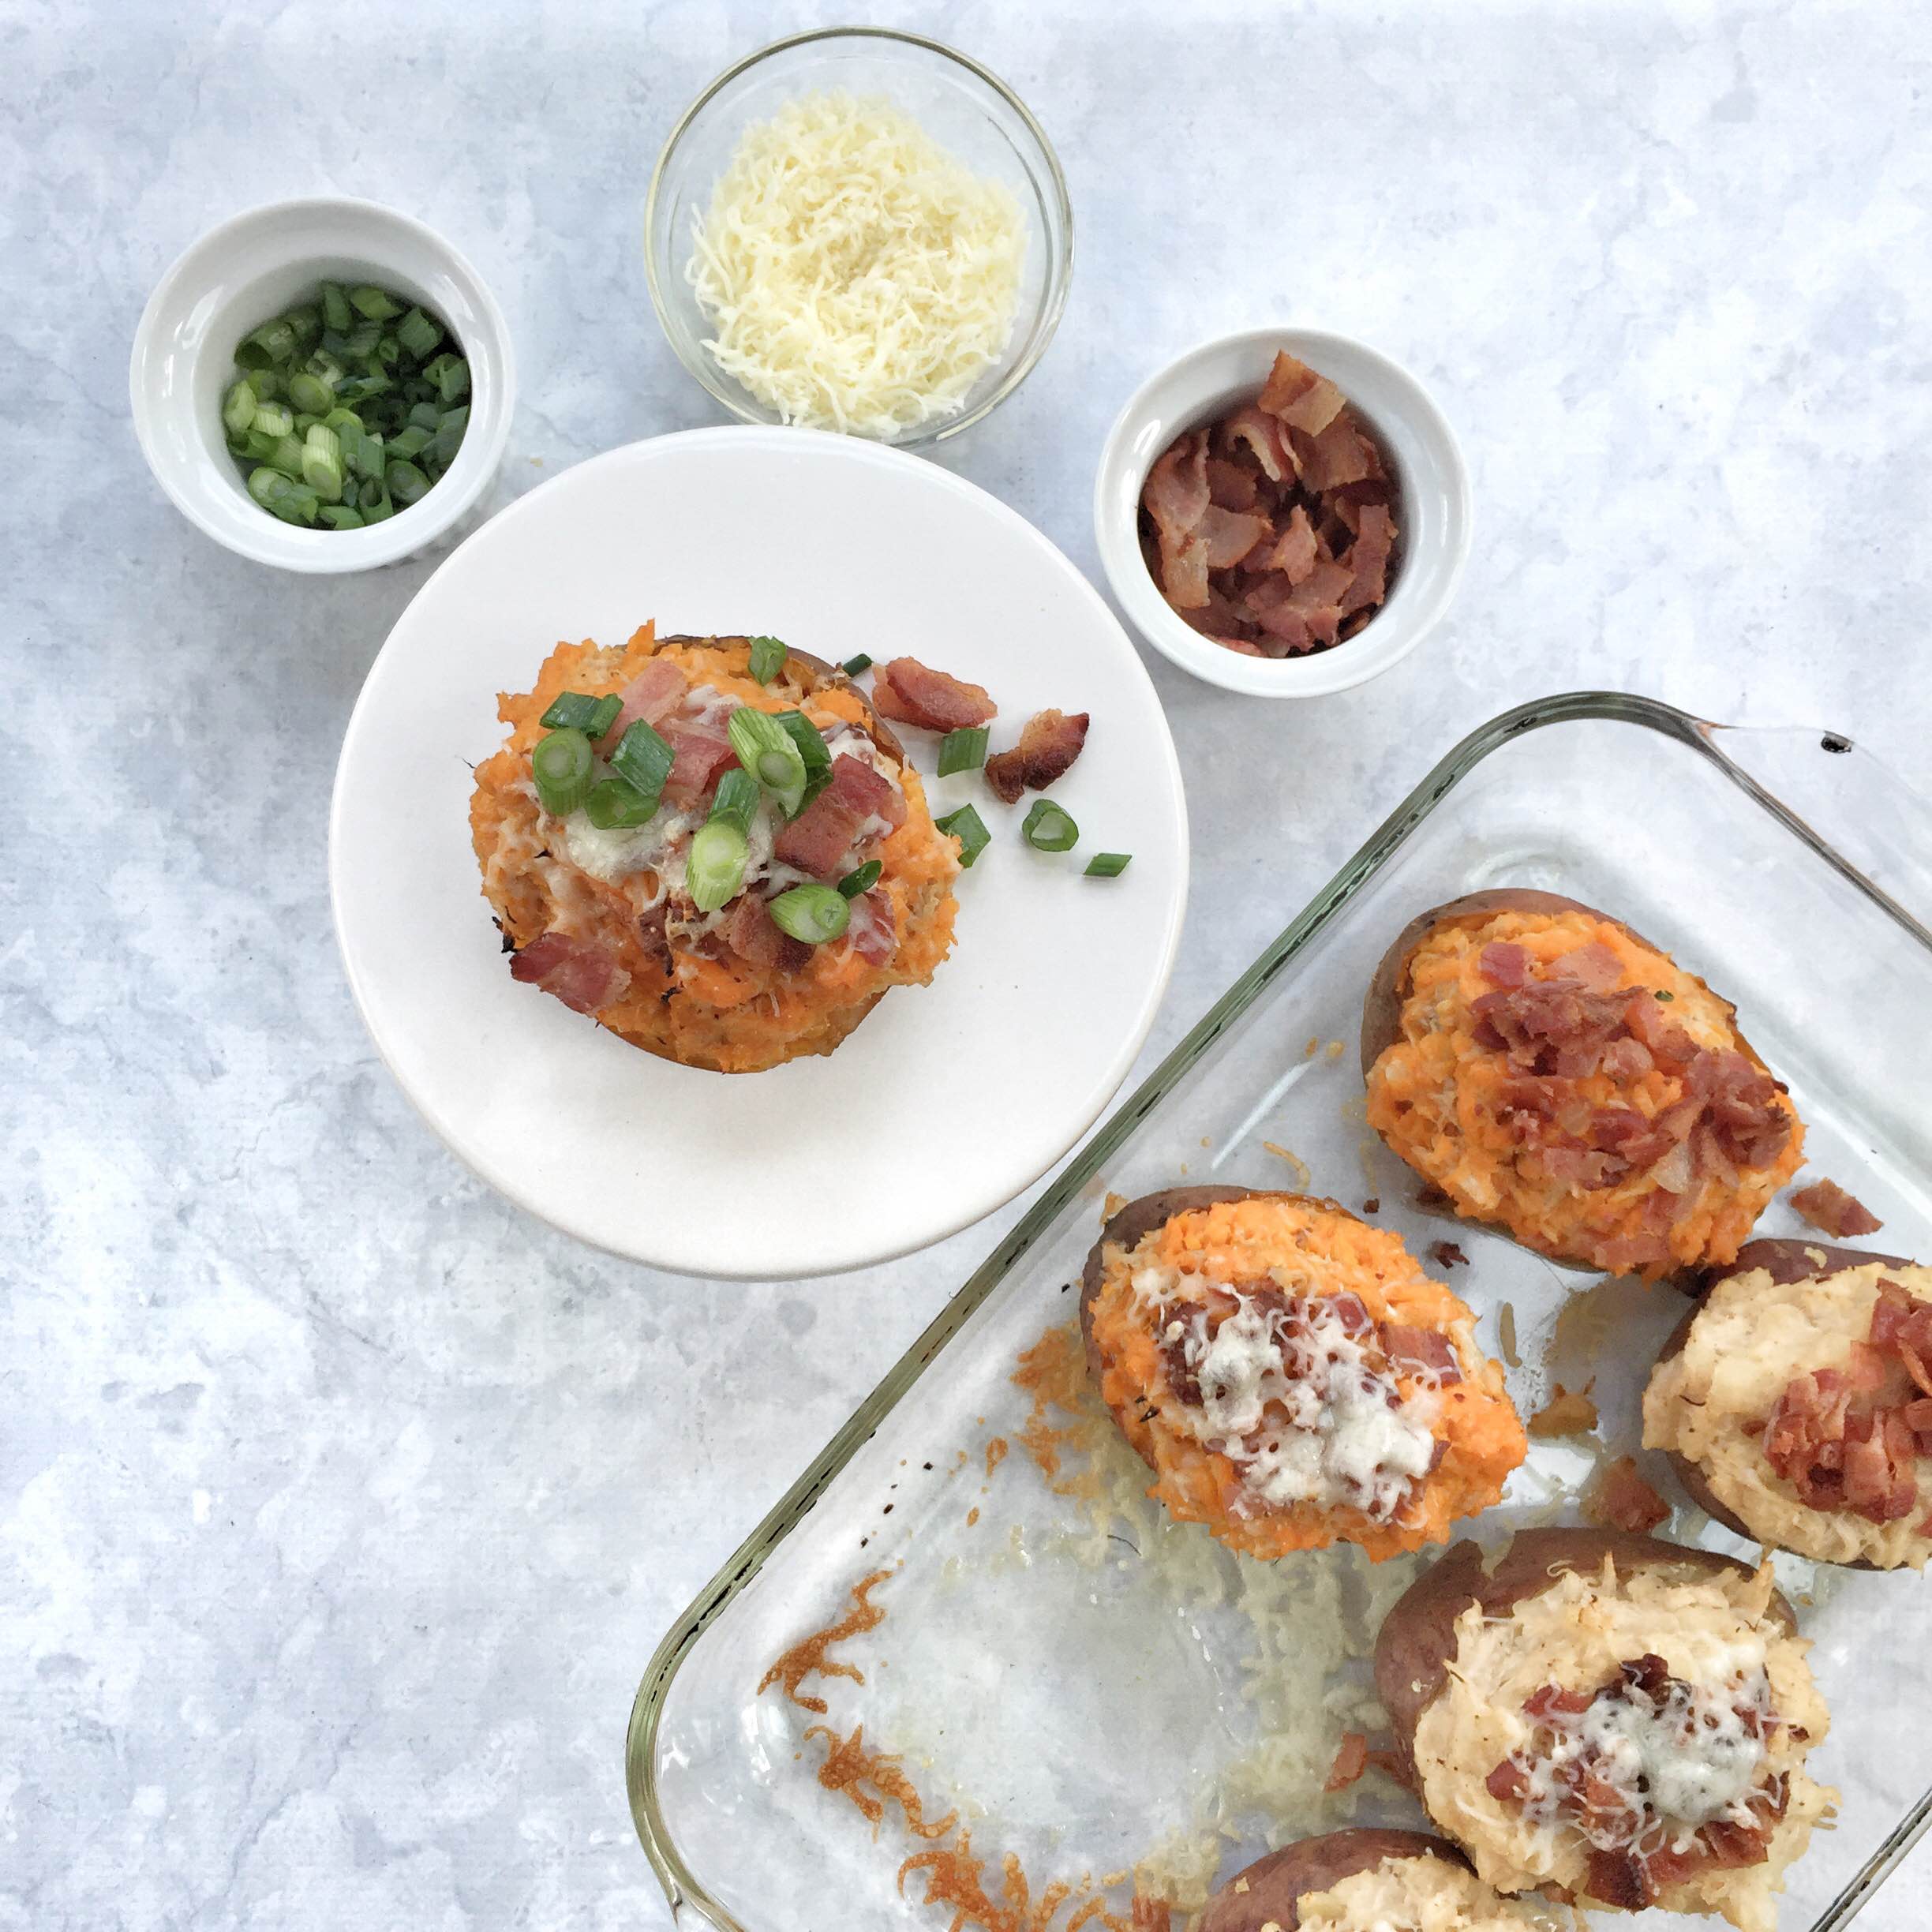 BBQ chicken twice baked potatoes | Sweet potato ideas and recipes | Simple family meals GinaKirk.com @ginaekirk